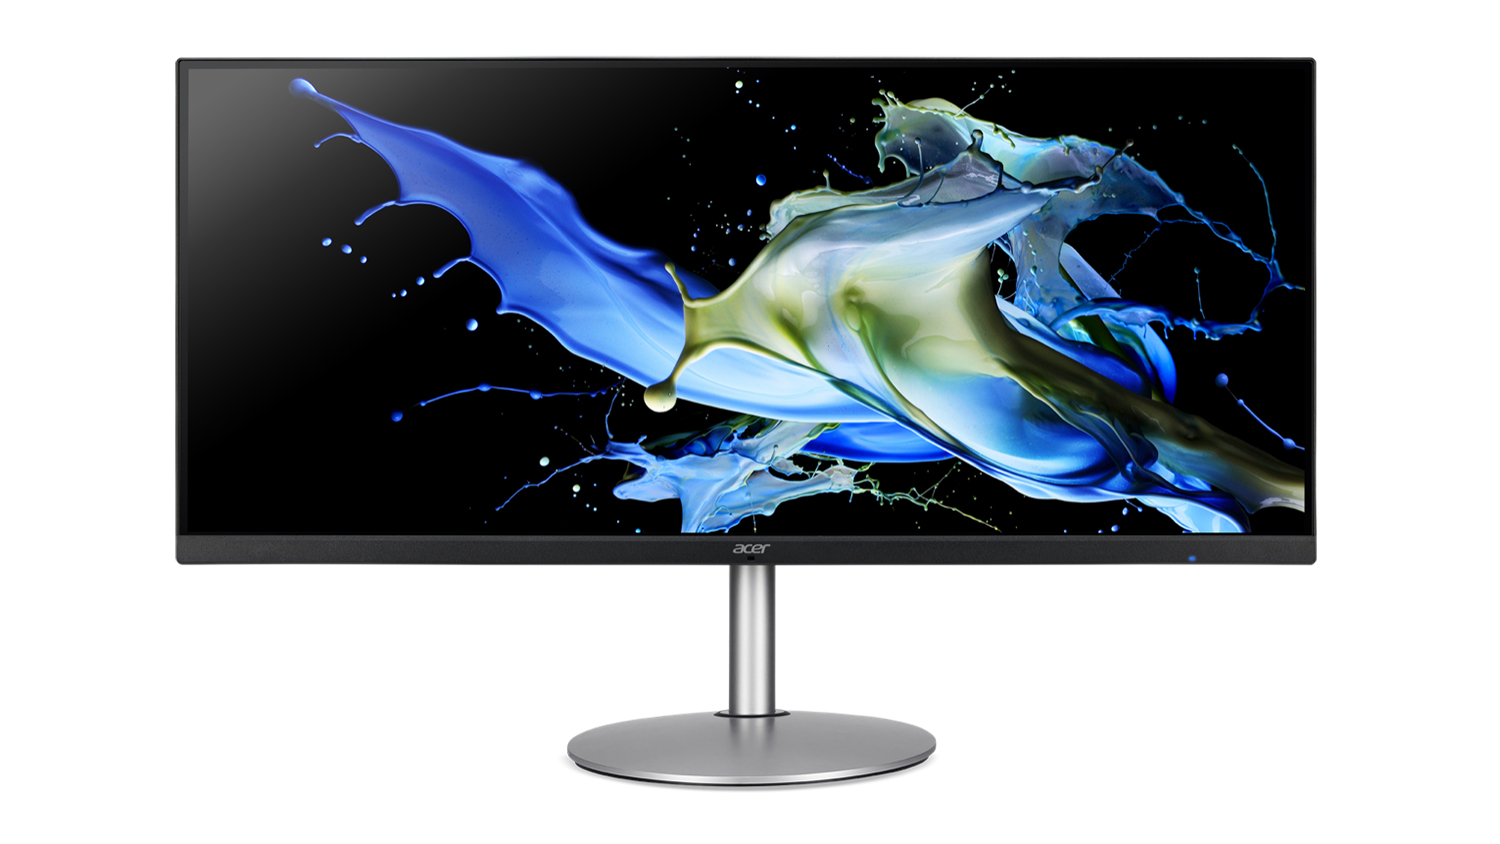 34 inch widescreen monitor dimensions